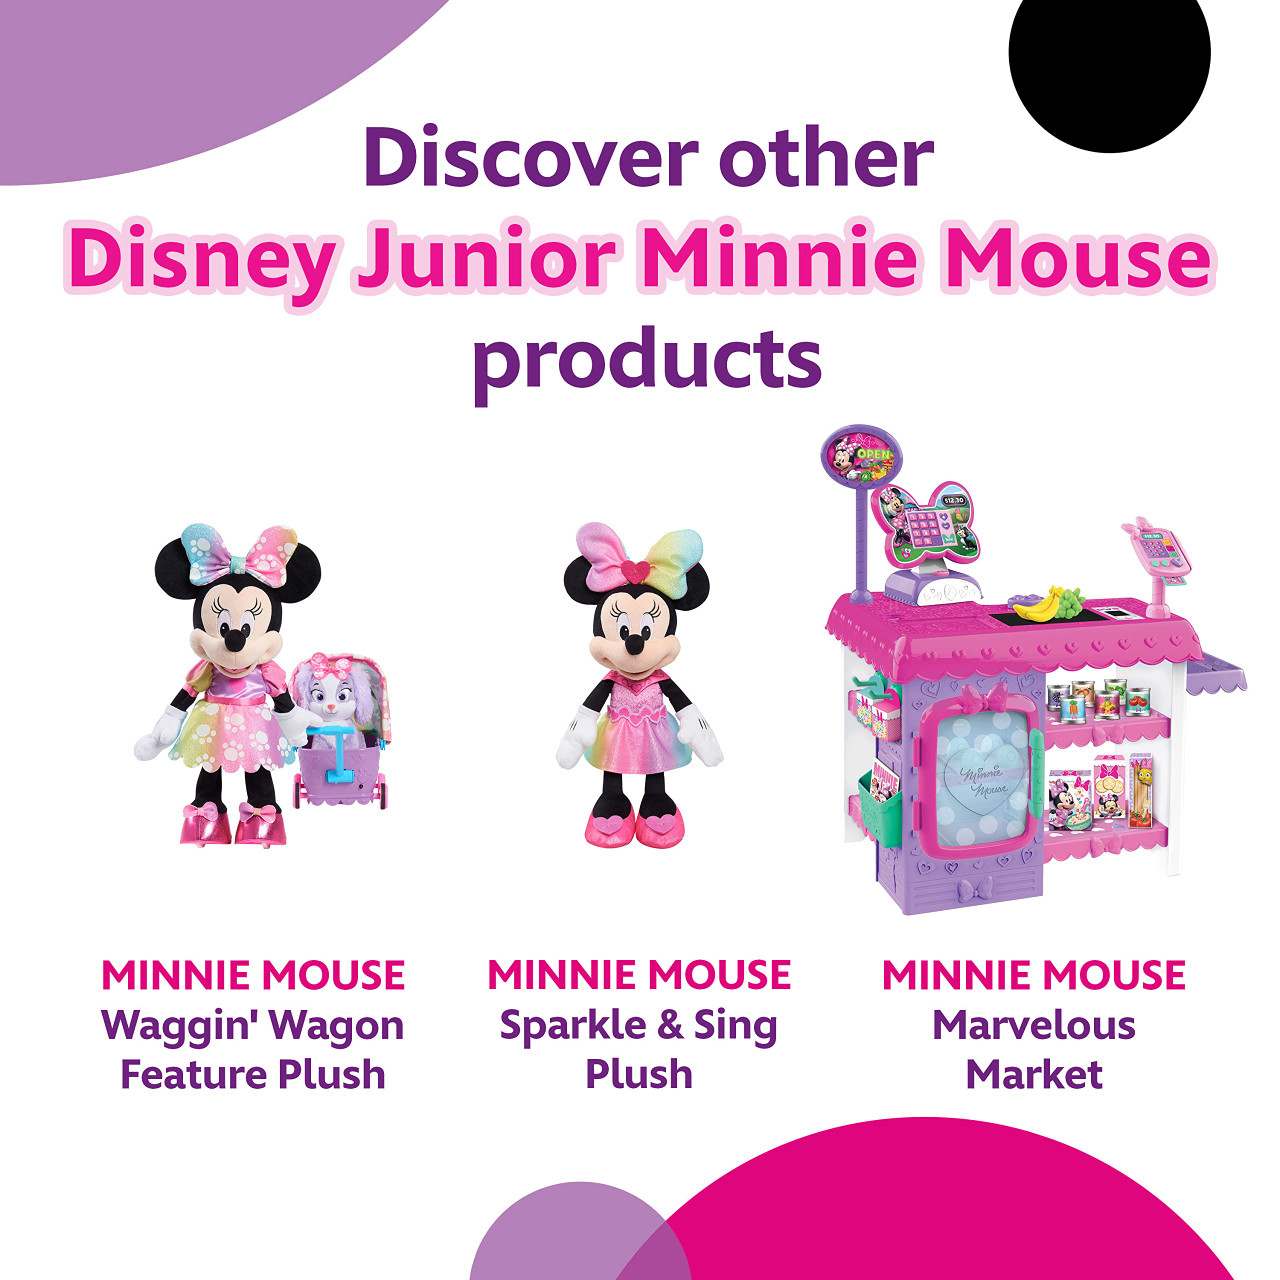 Minnie Mouse Marvelous Market : Target